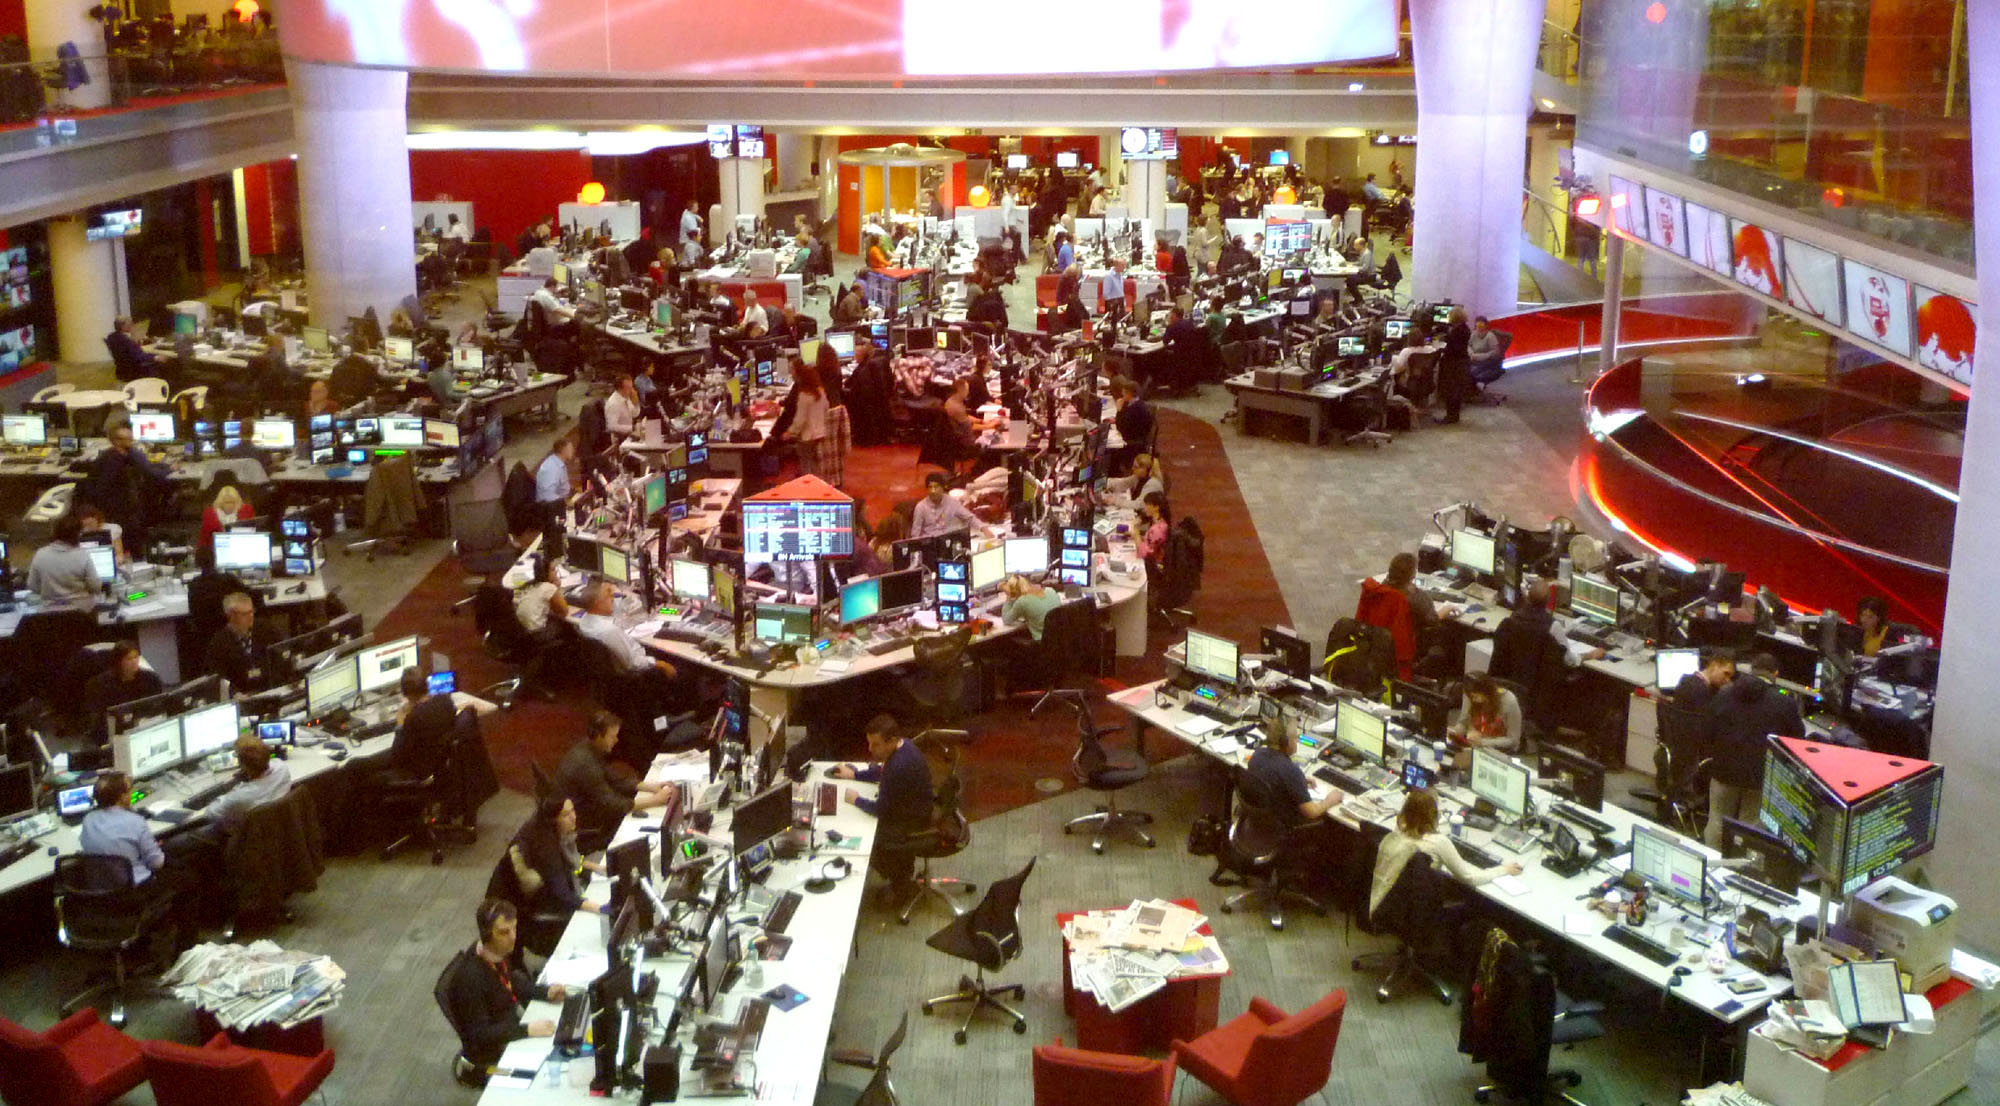 bbc newsroom